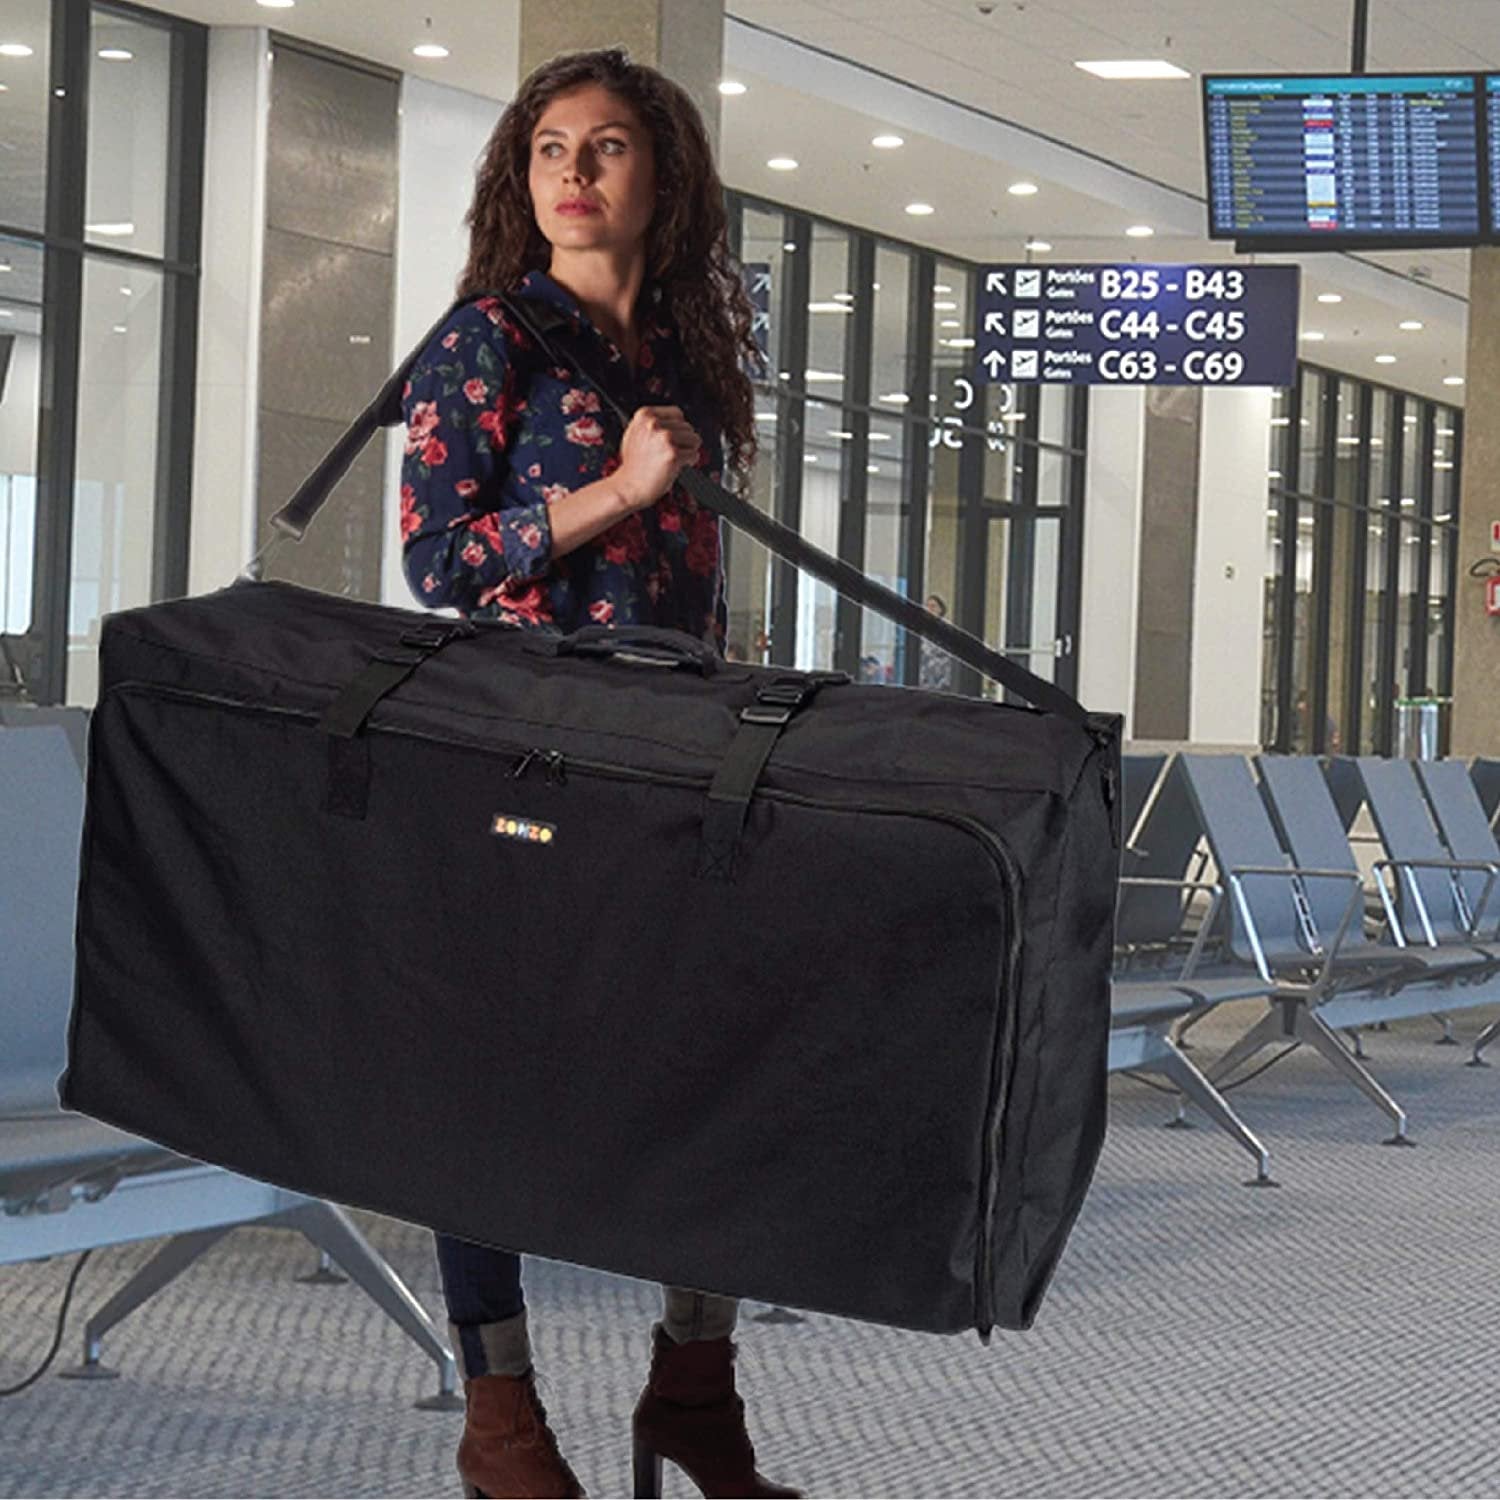 Zohzo Stroller Travel Bag | Black | Standard/Double | 41x21x13.5 Inch | Free Shipping/Returns